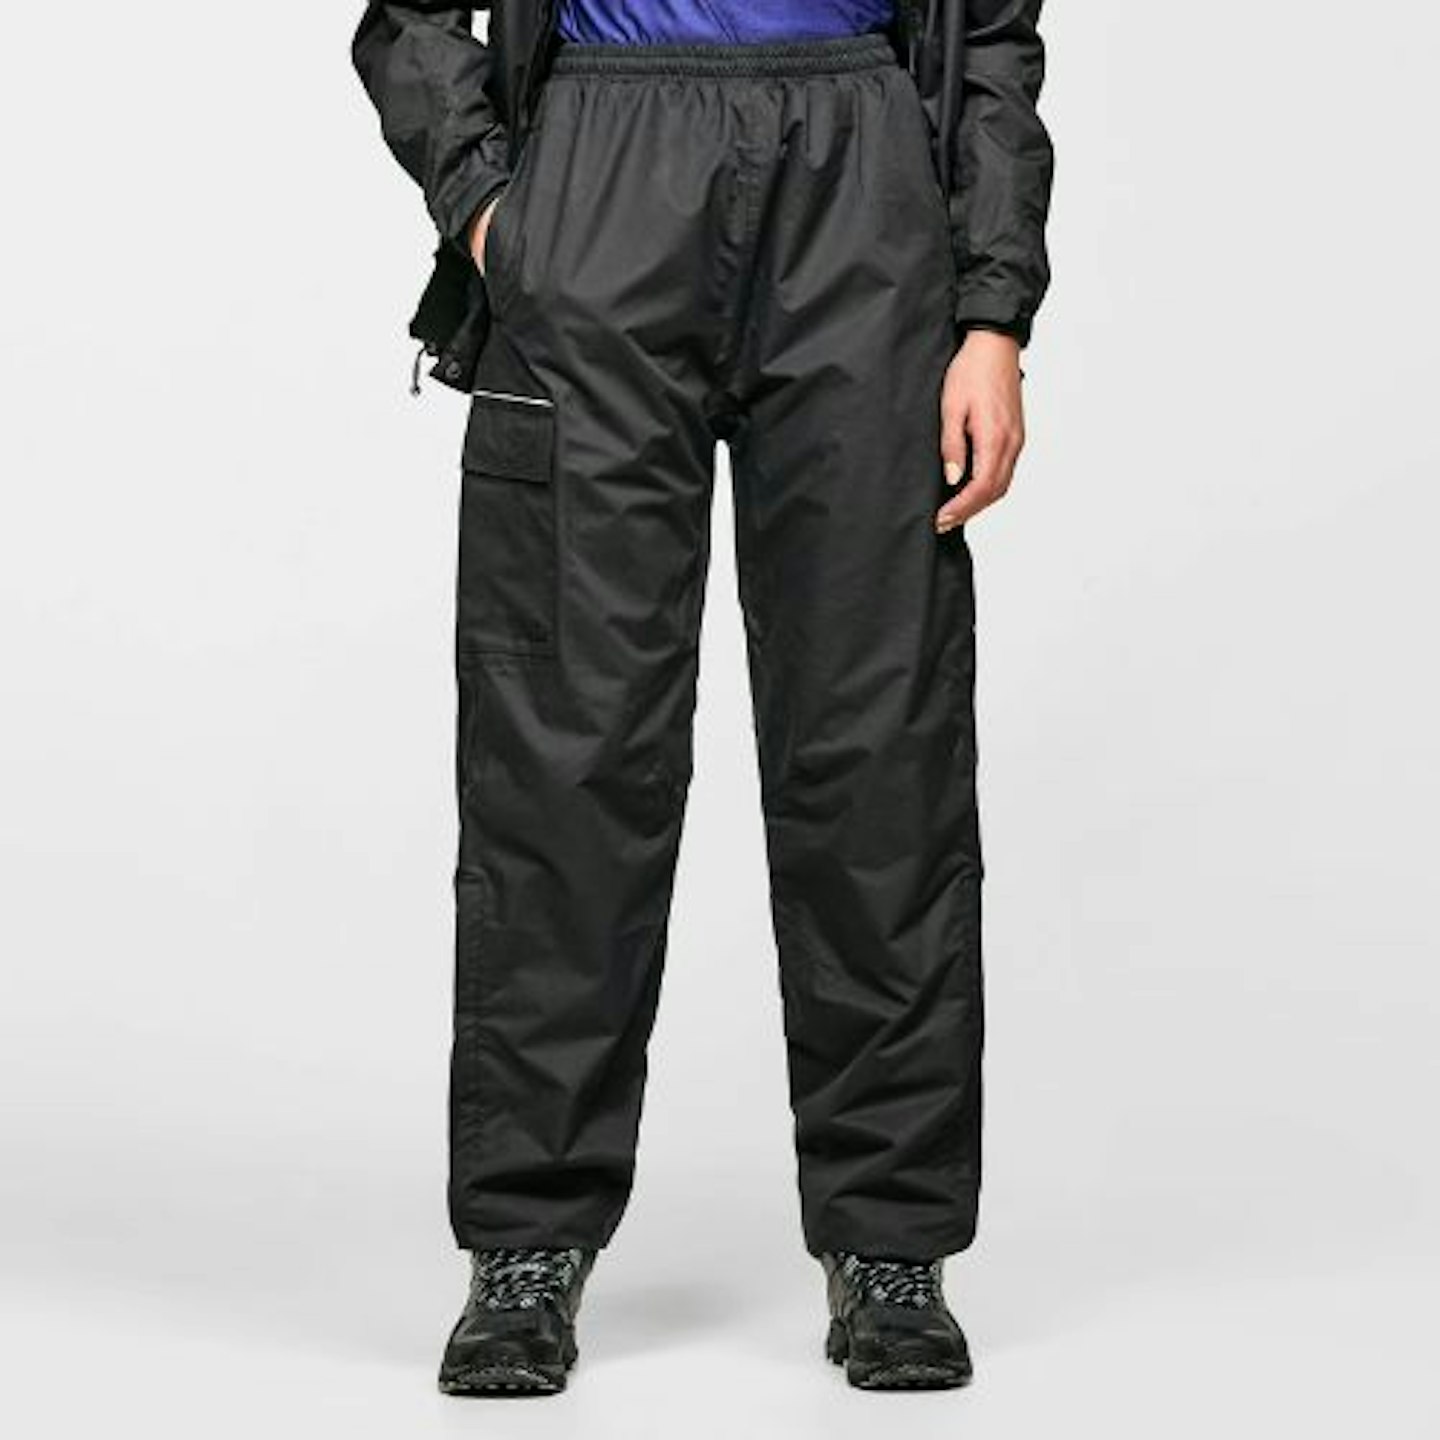 Peter Storm Women's Storm Waterproof Trousers